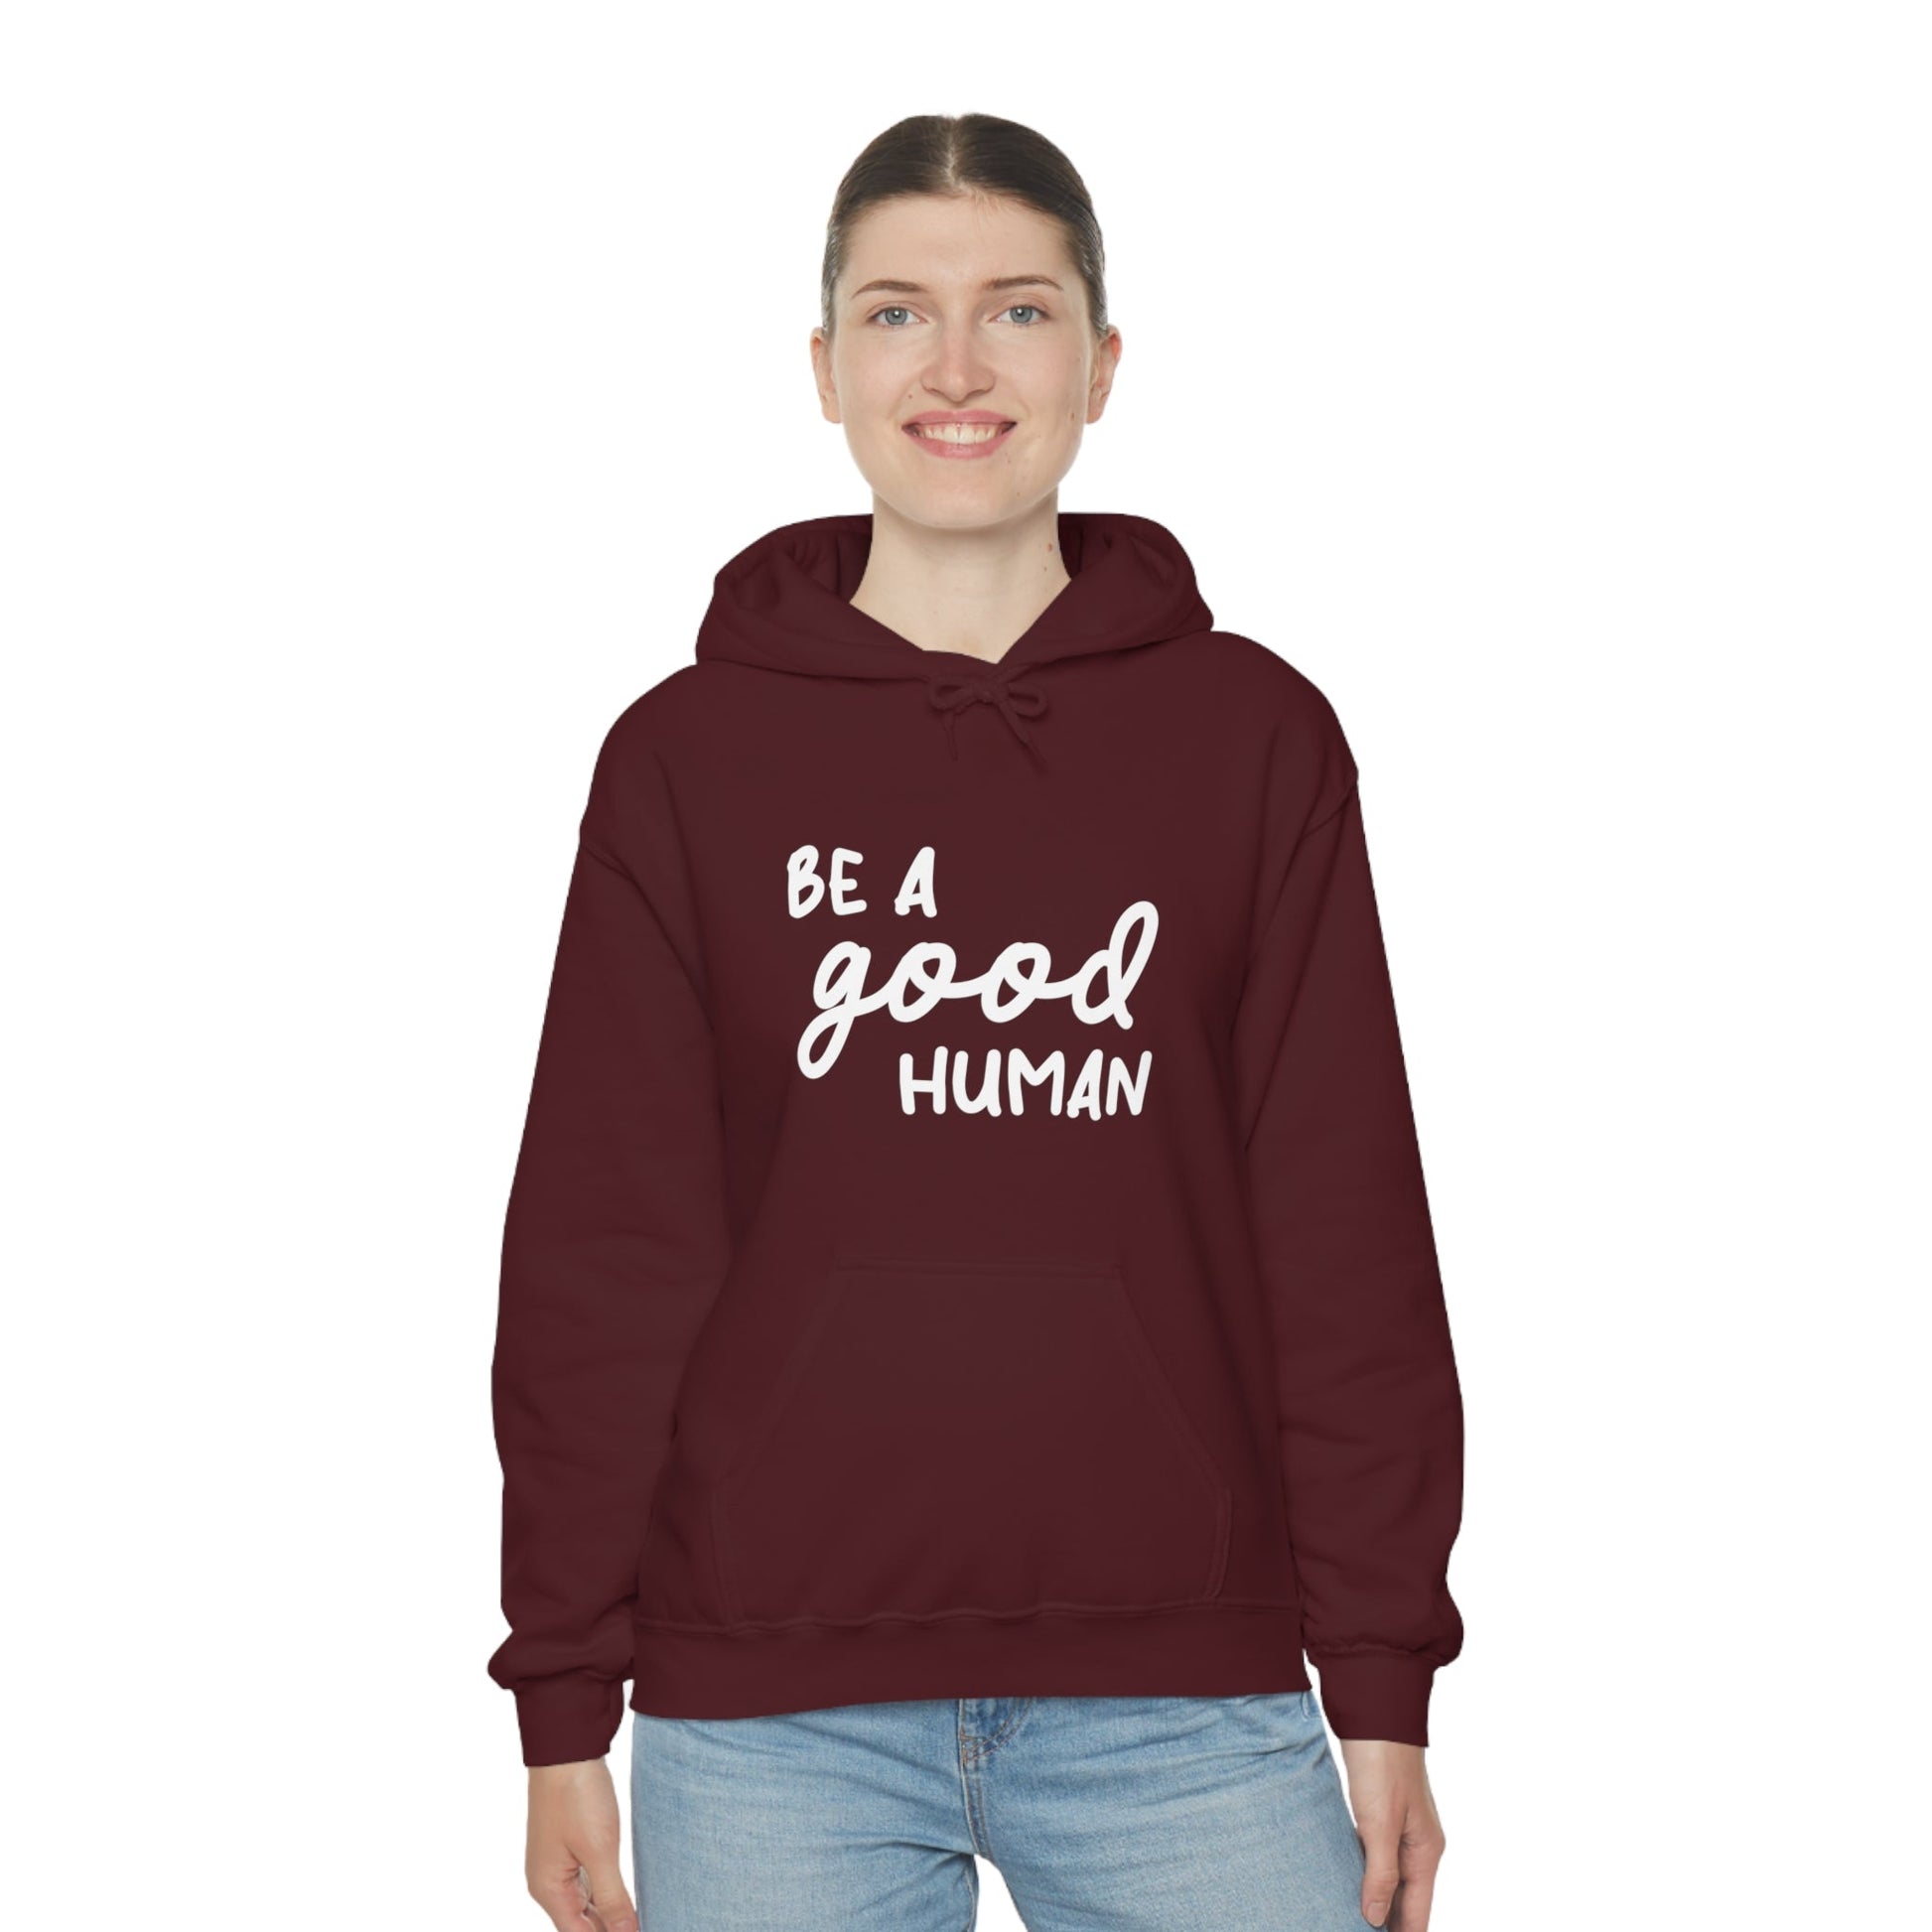 Be A Good Human | Hooded Sweatshirt - Detezi Designs-56770440776516457922